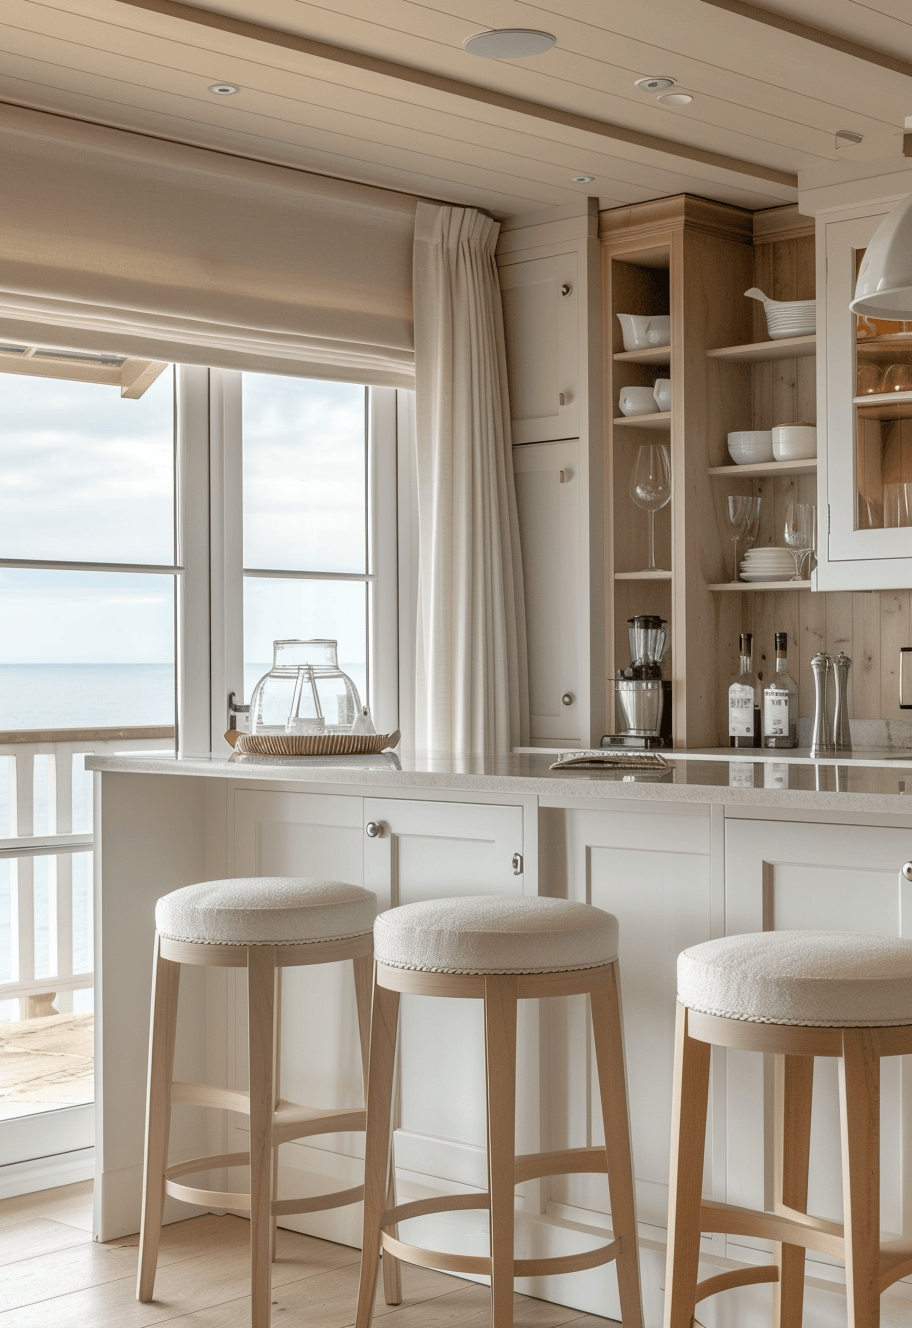 Coastal Kitchen Chairs/ Comfortable wicker chairs around a coastal kitchen table setting